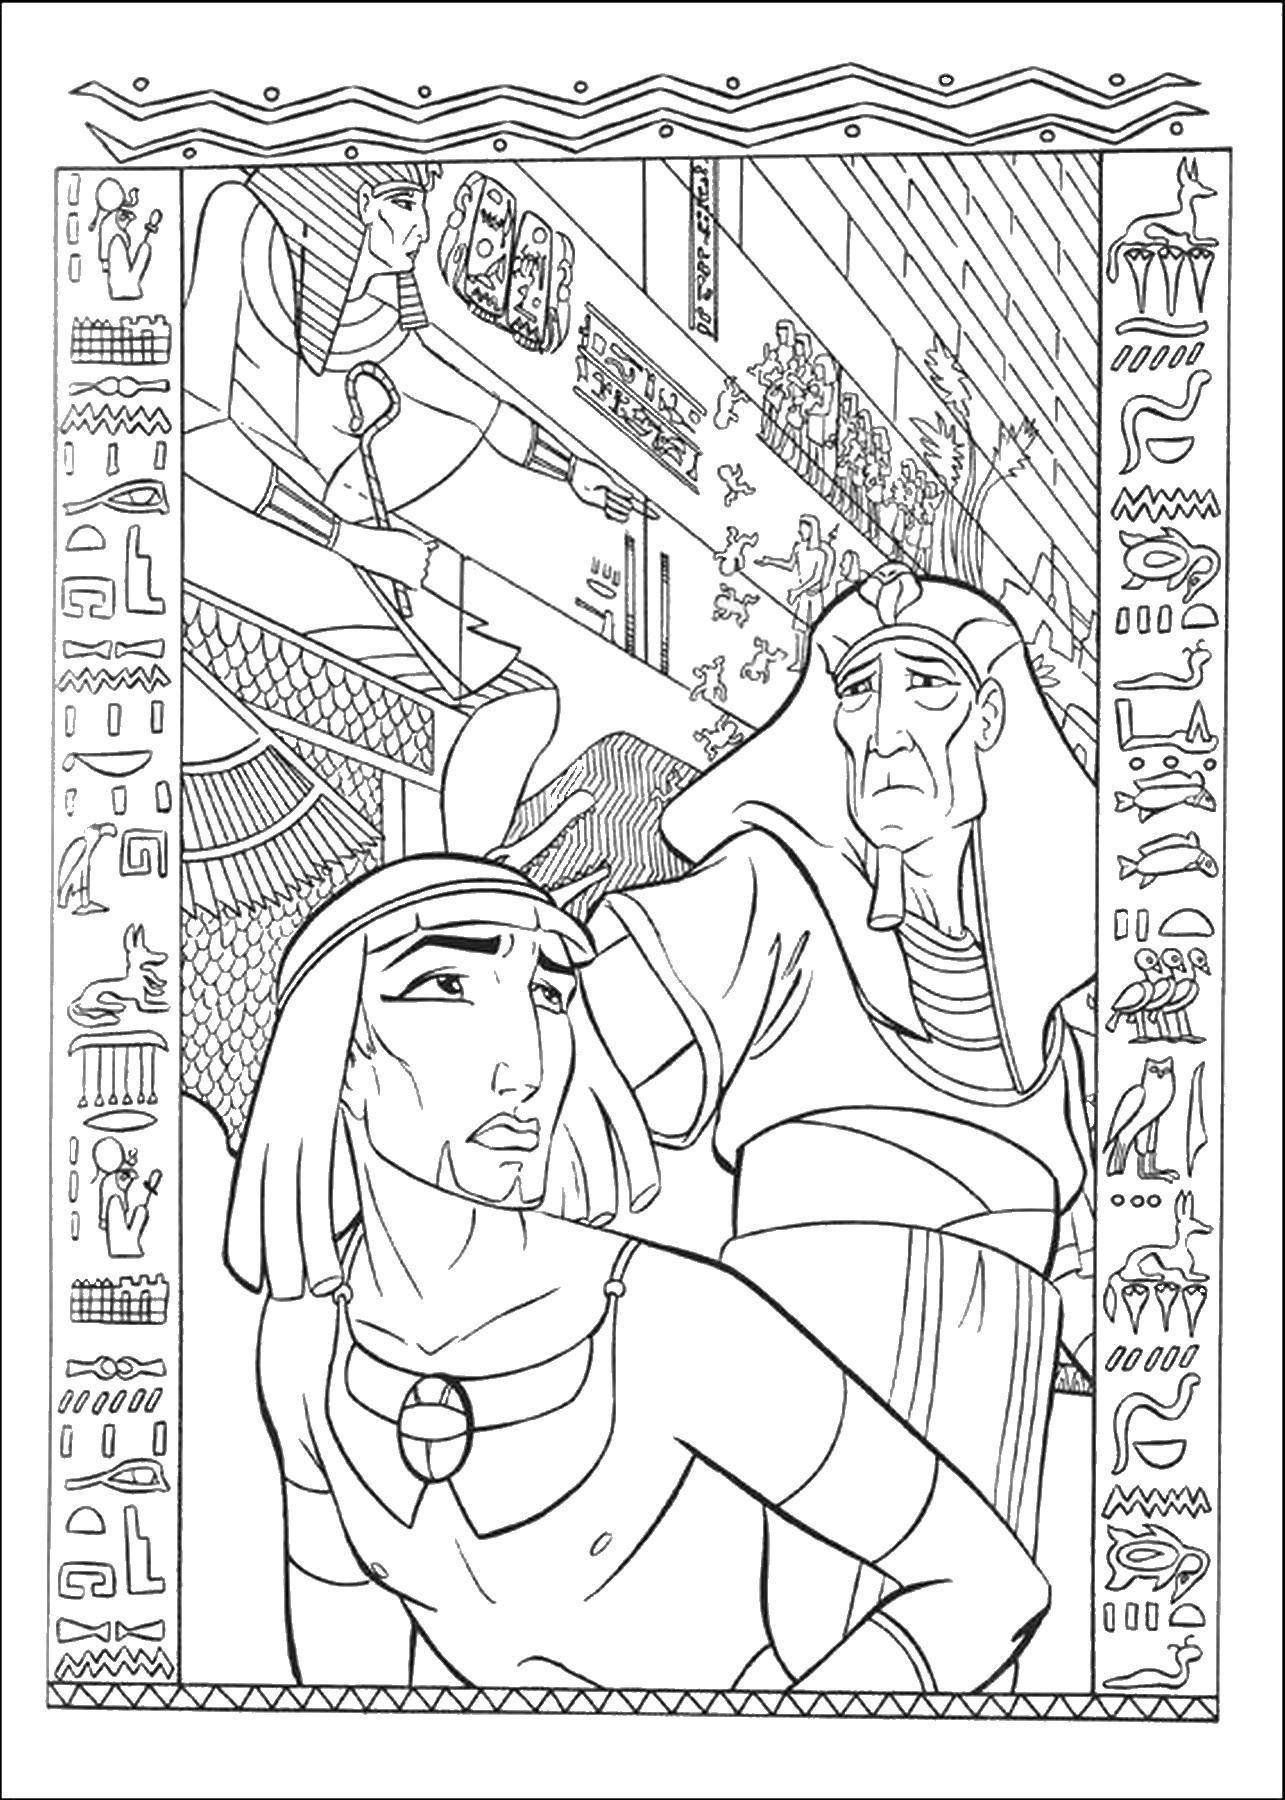 Название: Раскраска Египет, фараон. Категория: Египет. Теги: Египет.